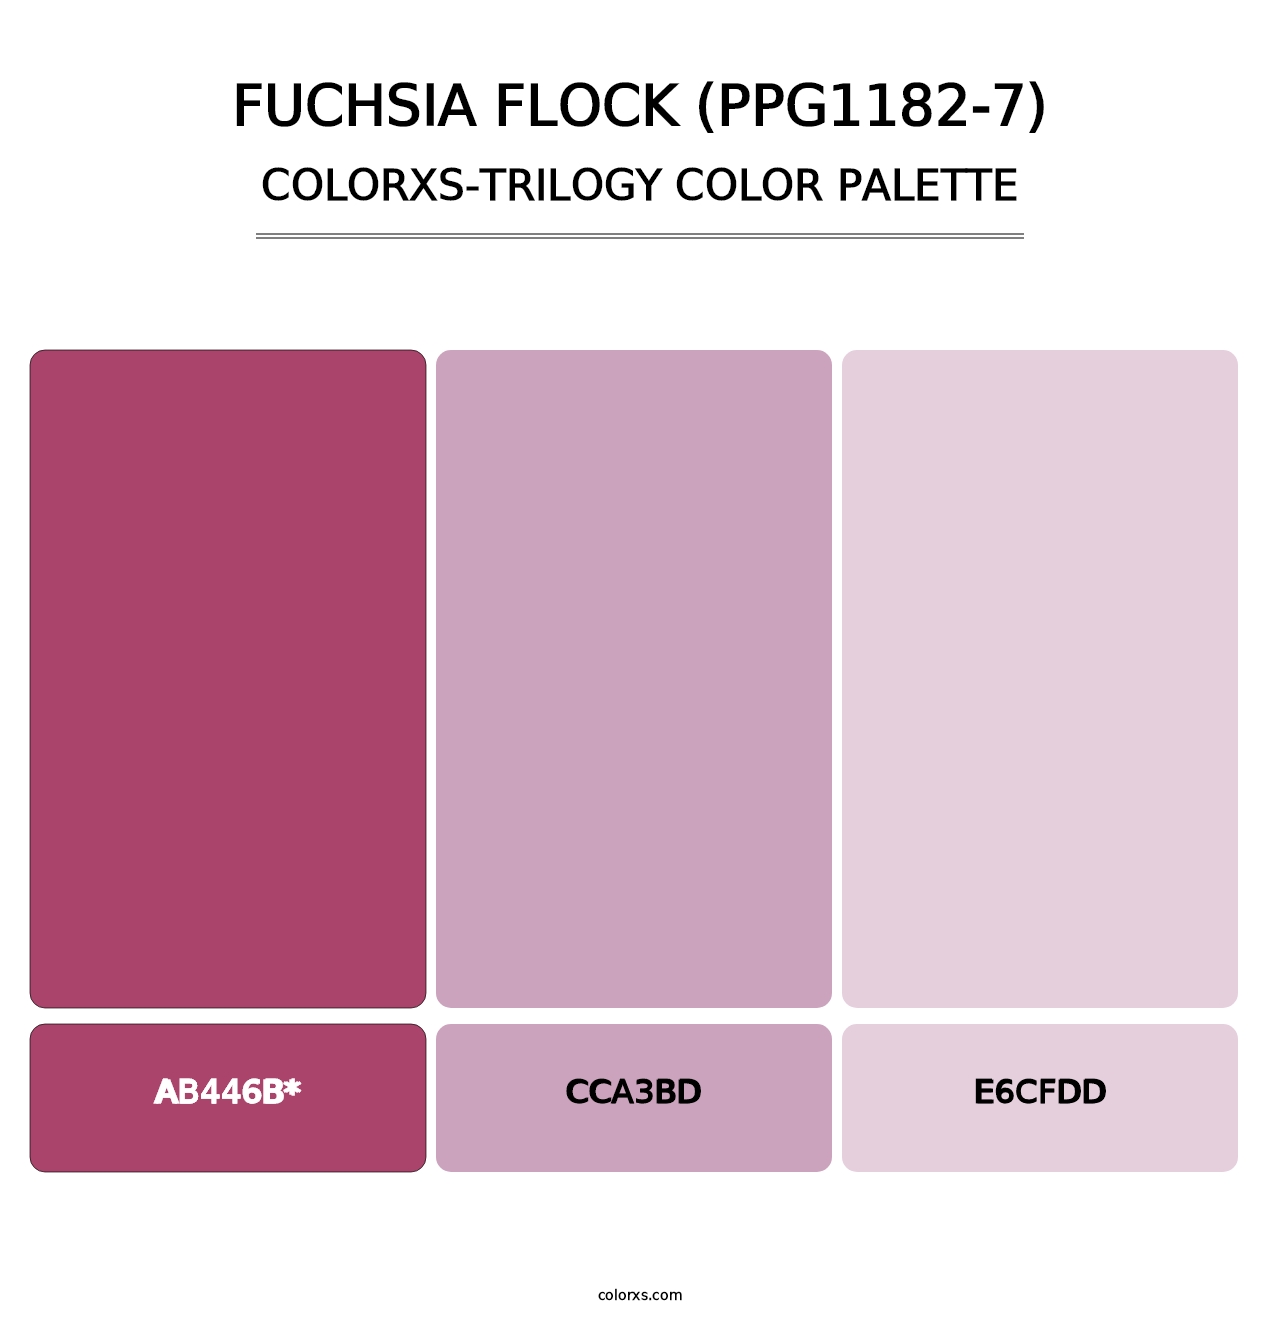 Fuchsia Flock (PPG1182-7) - Colorxs Trilogy Palette